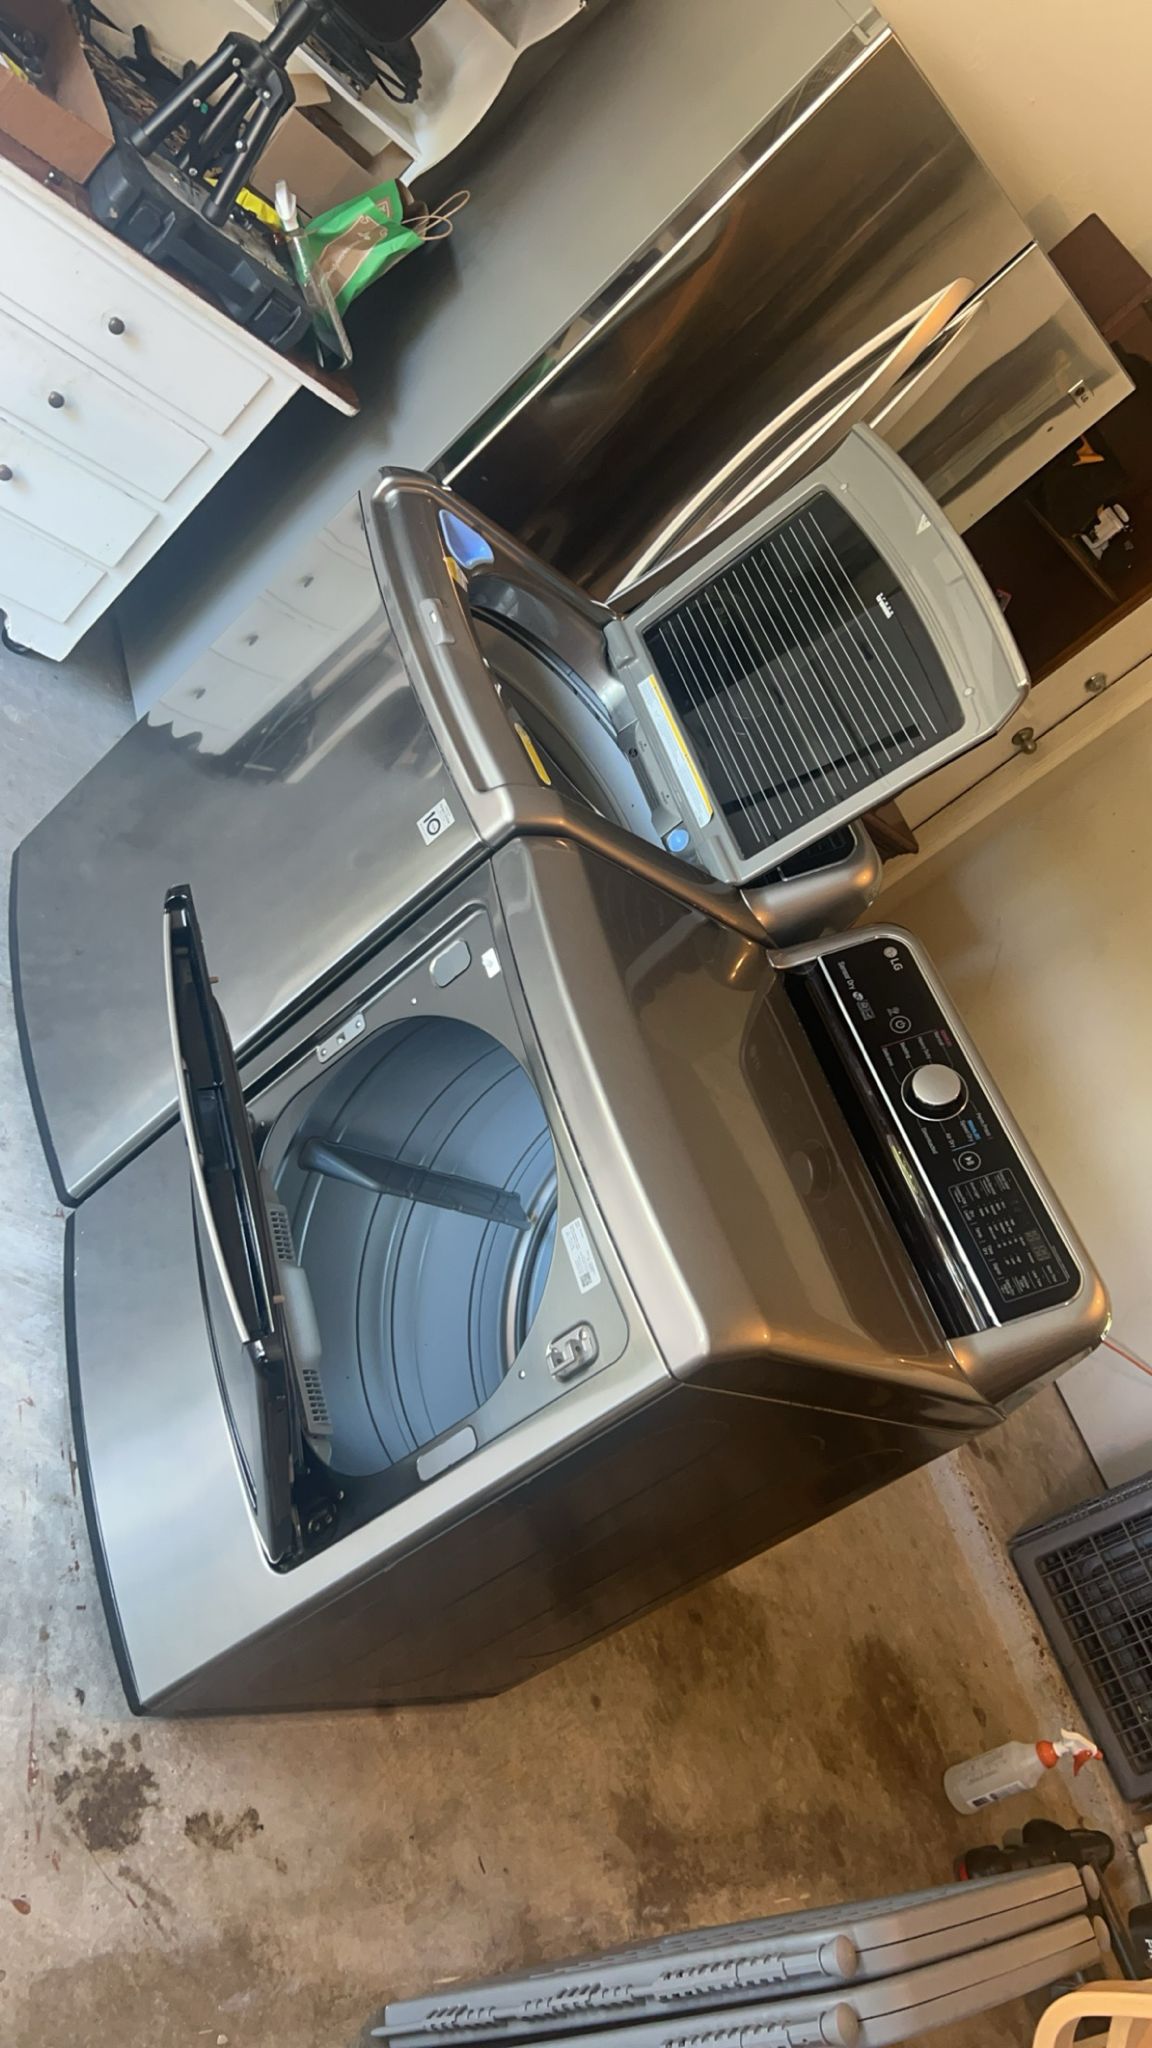 LG Smart Washer/Dryer Electric Set ($1,200)